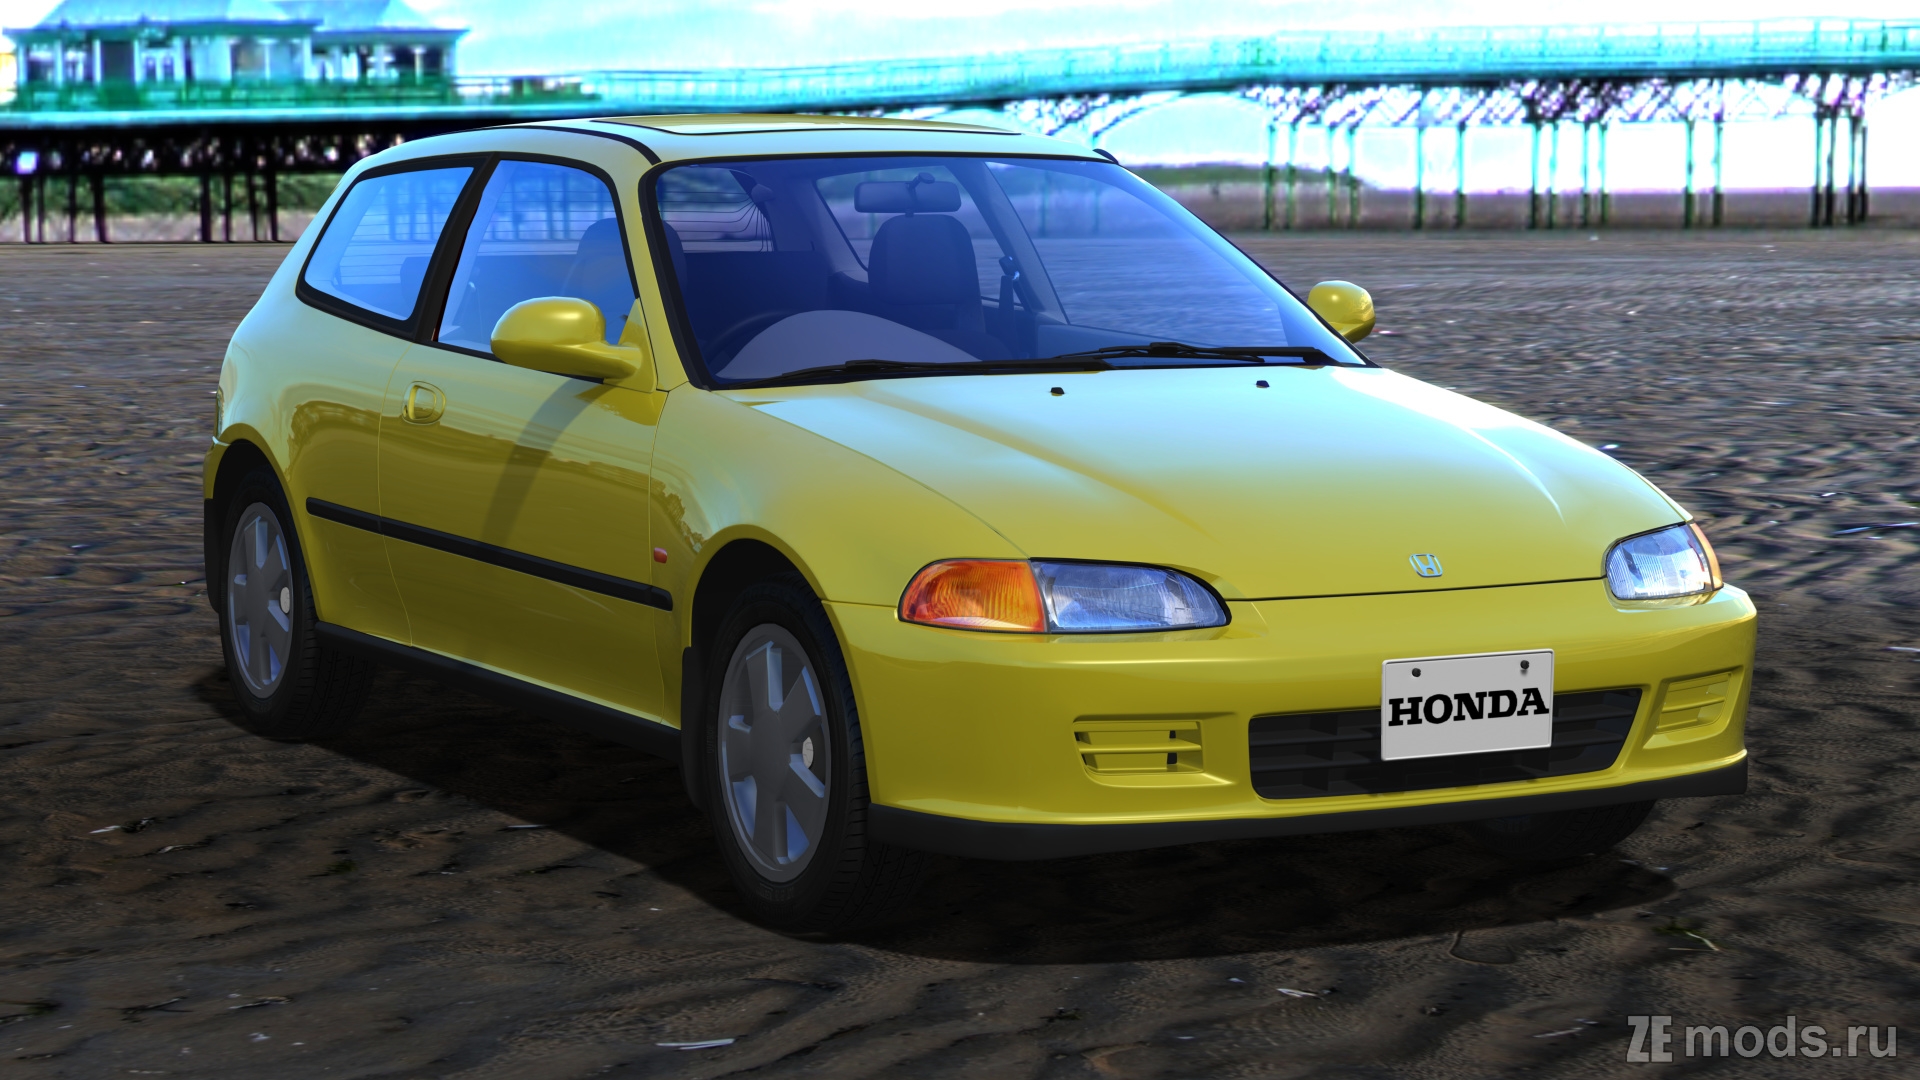 Honda Civic EG6 версия REV 3a для Assetto Corsa